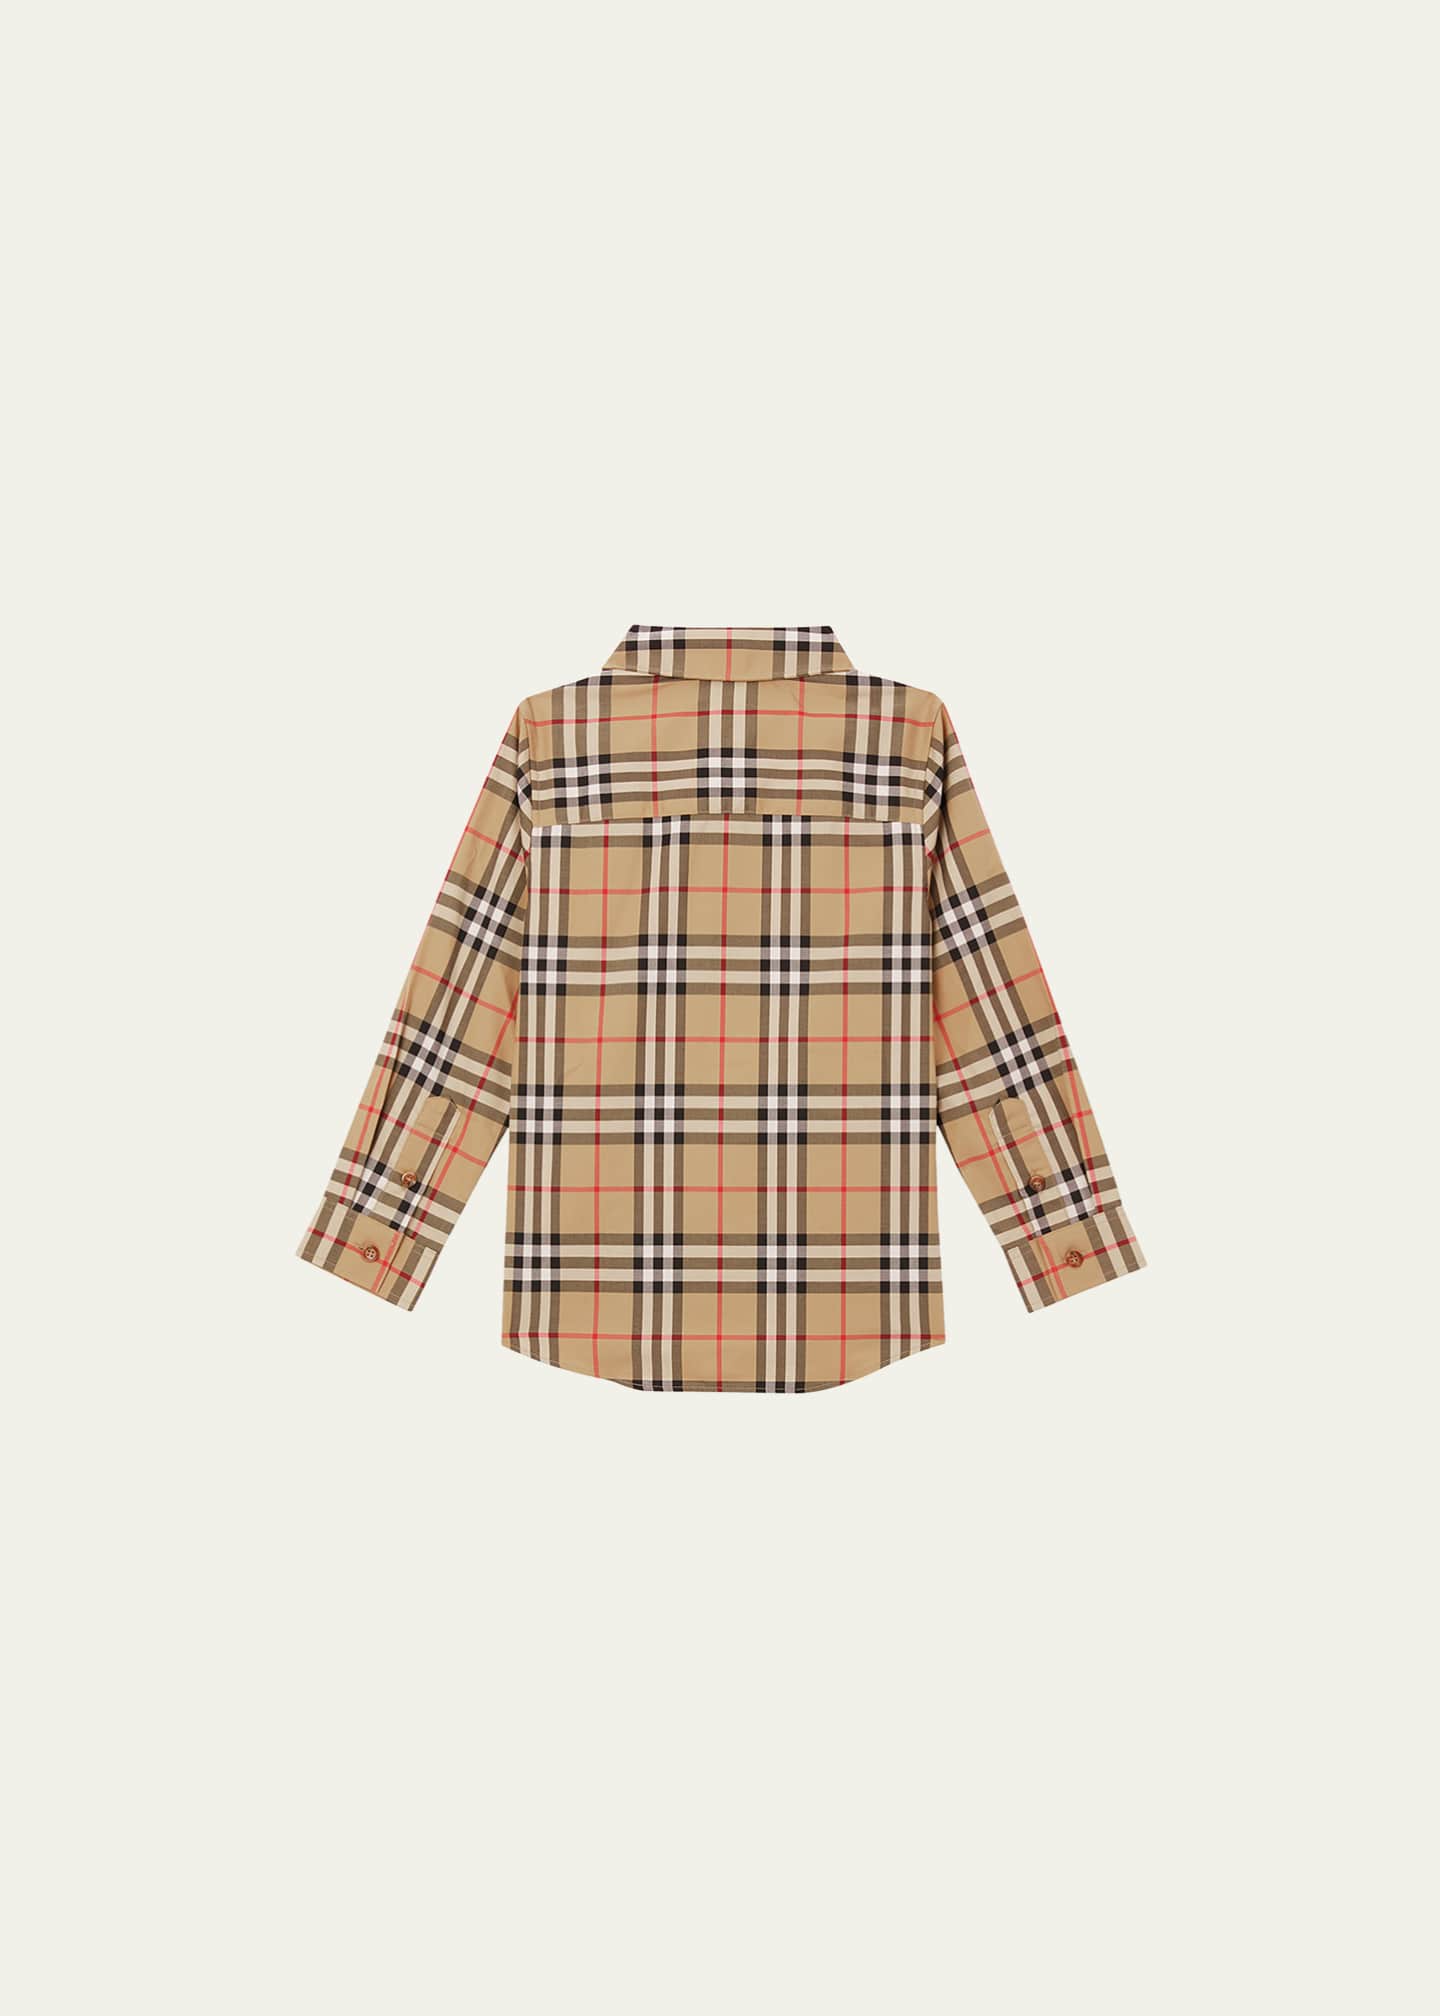 Burberry Boy's Owen Check-Print Shirt, Size 3-14 - Bergdorf Goodman